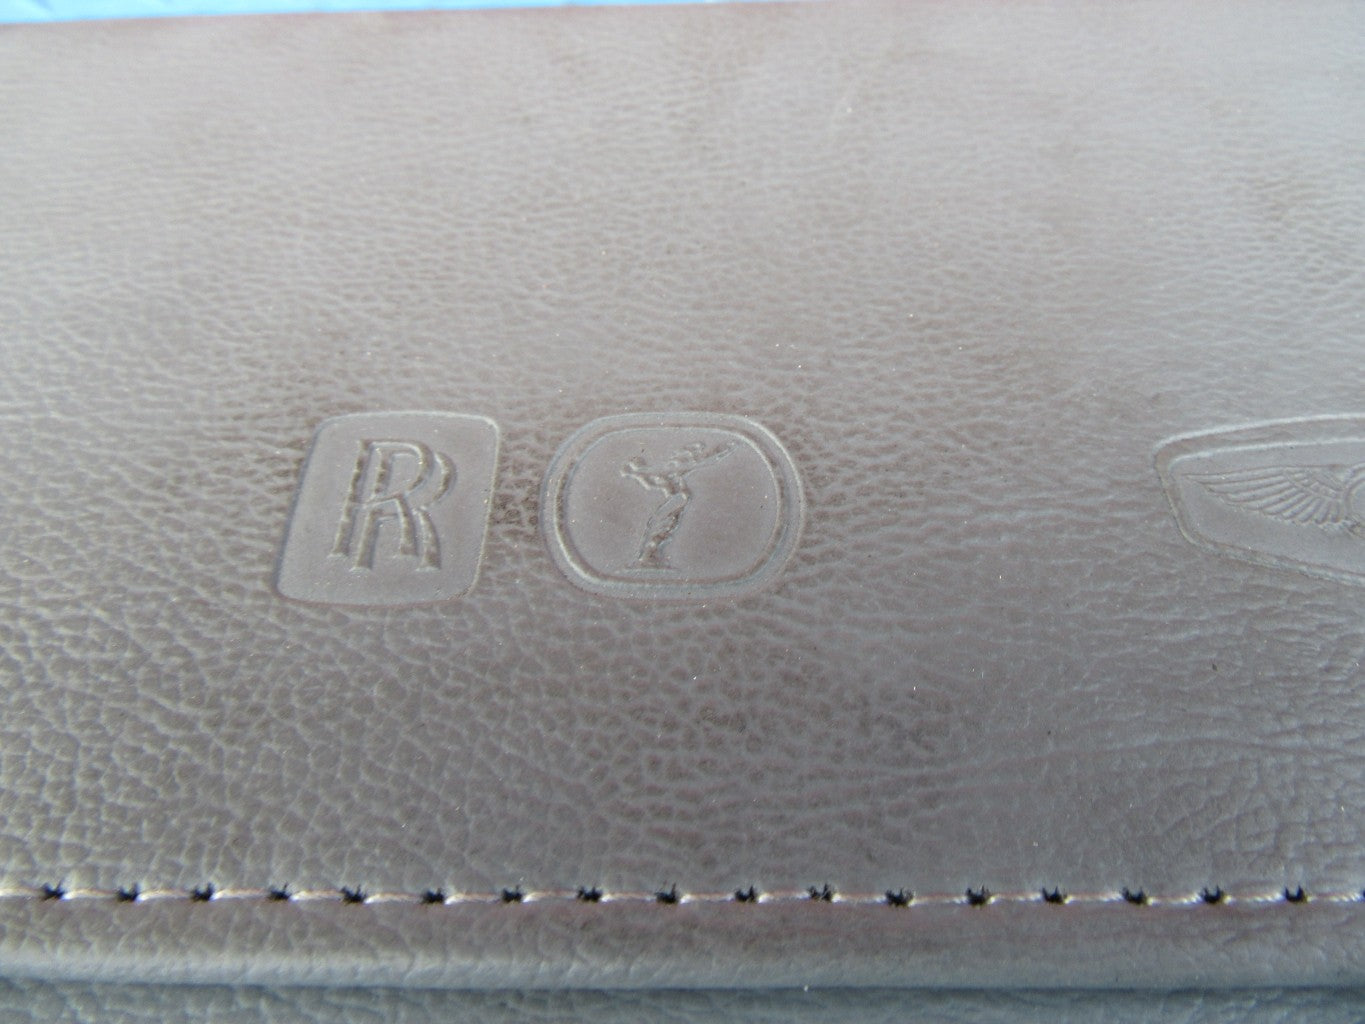 Rolls Royce Bentley service schedules dealer network handbooks pouch #0100